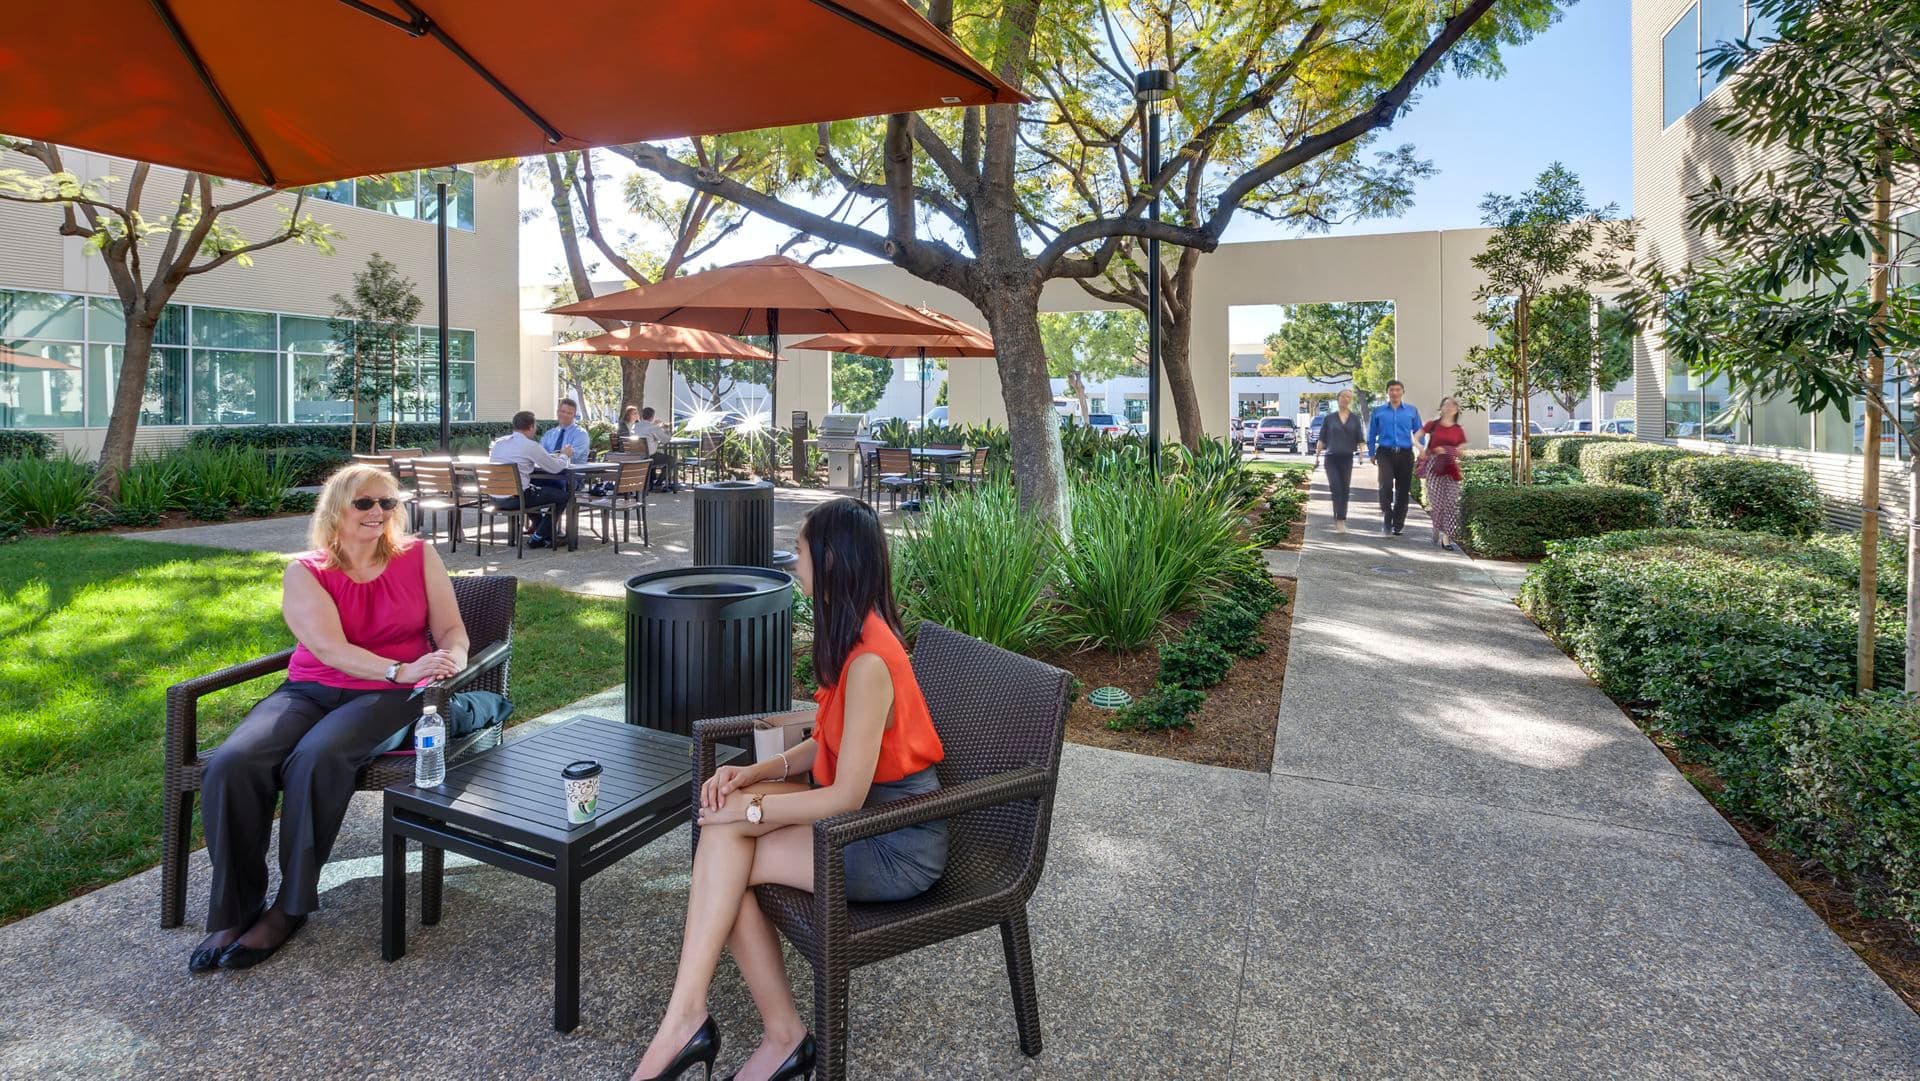 Outdoor Amenities - Corporate Business Center - 123-175 Technology Drive  Irvine, CA 92618